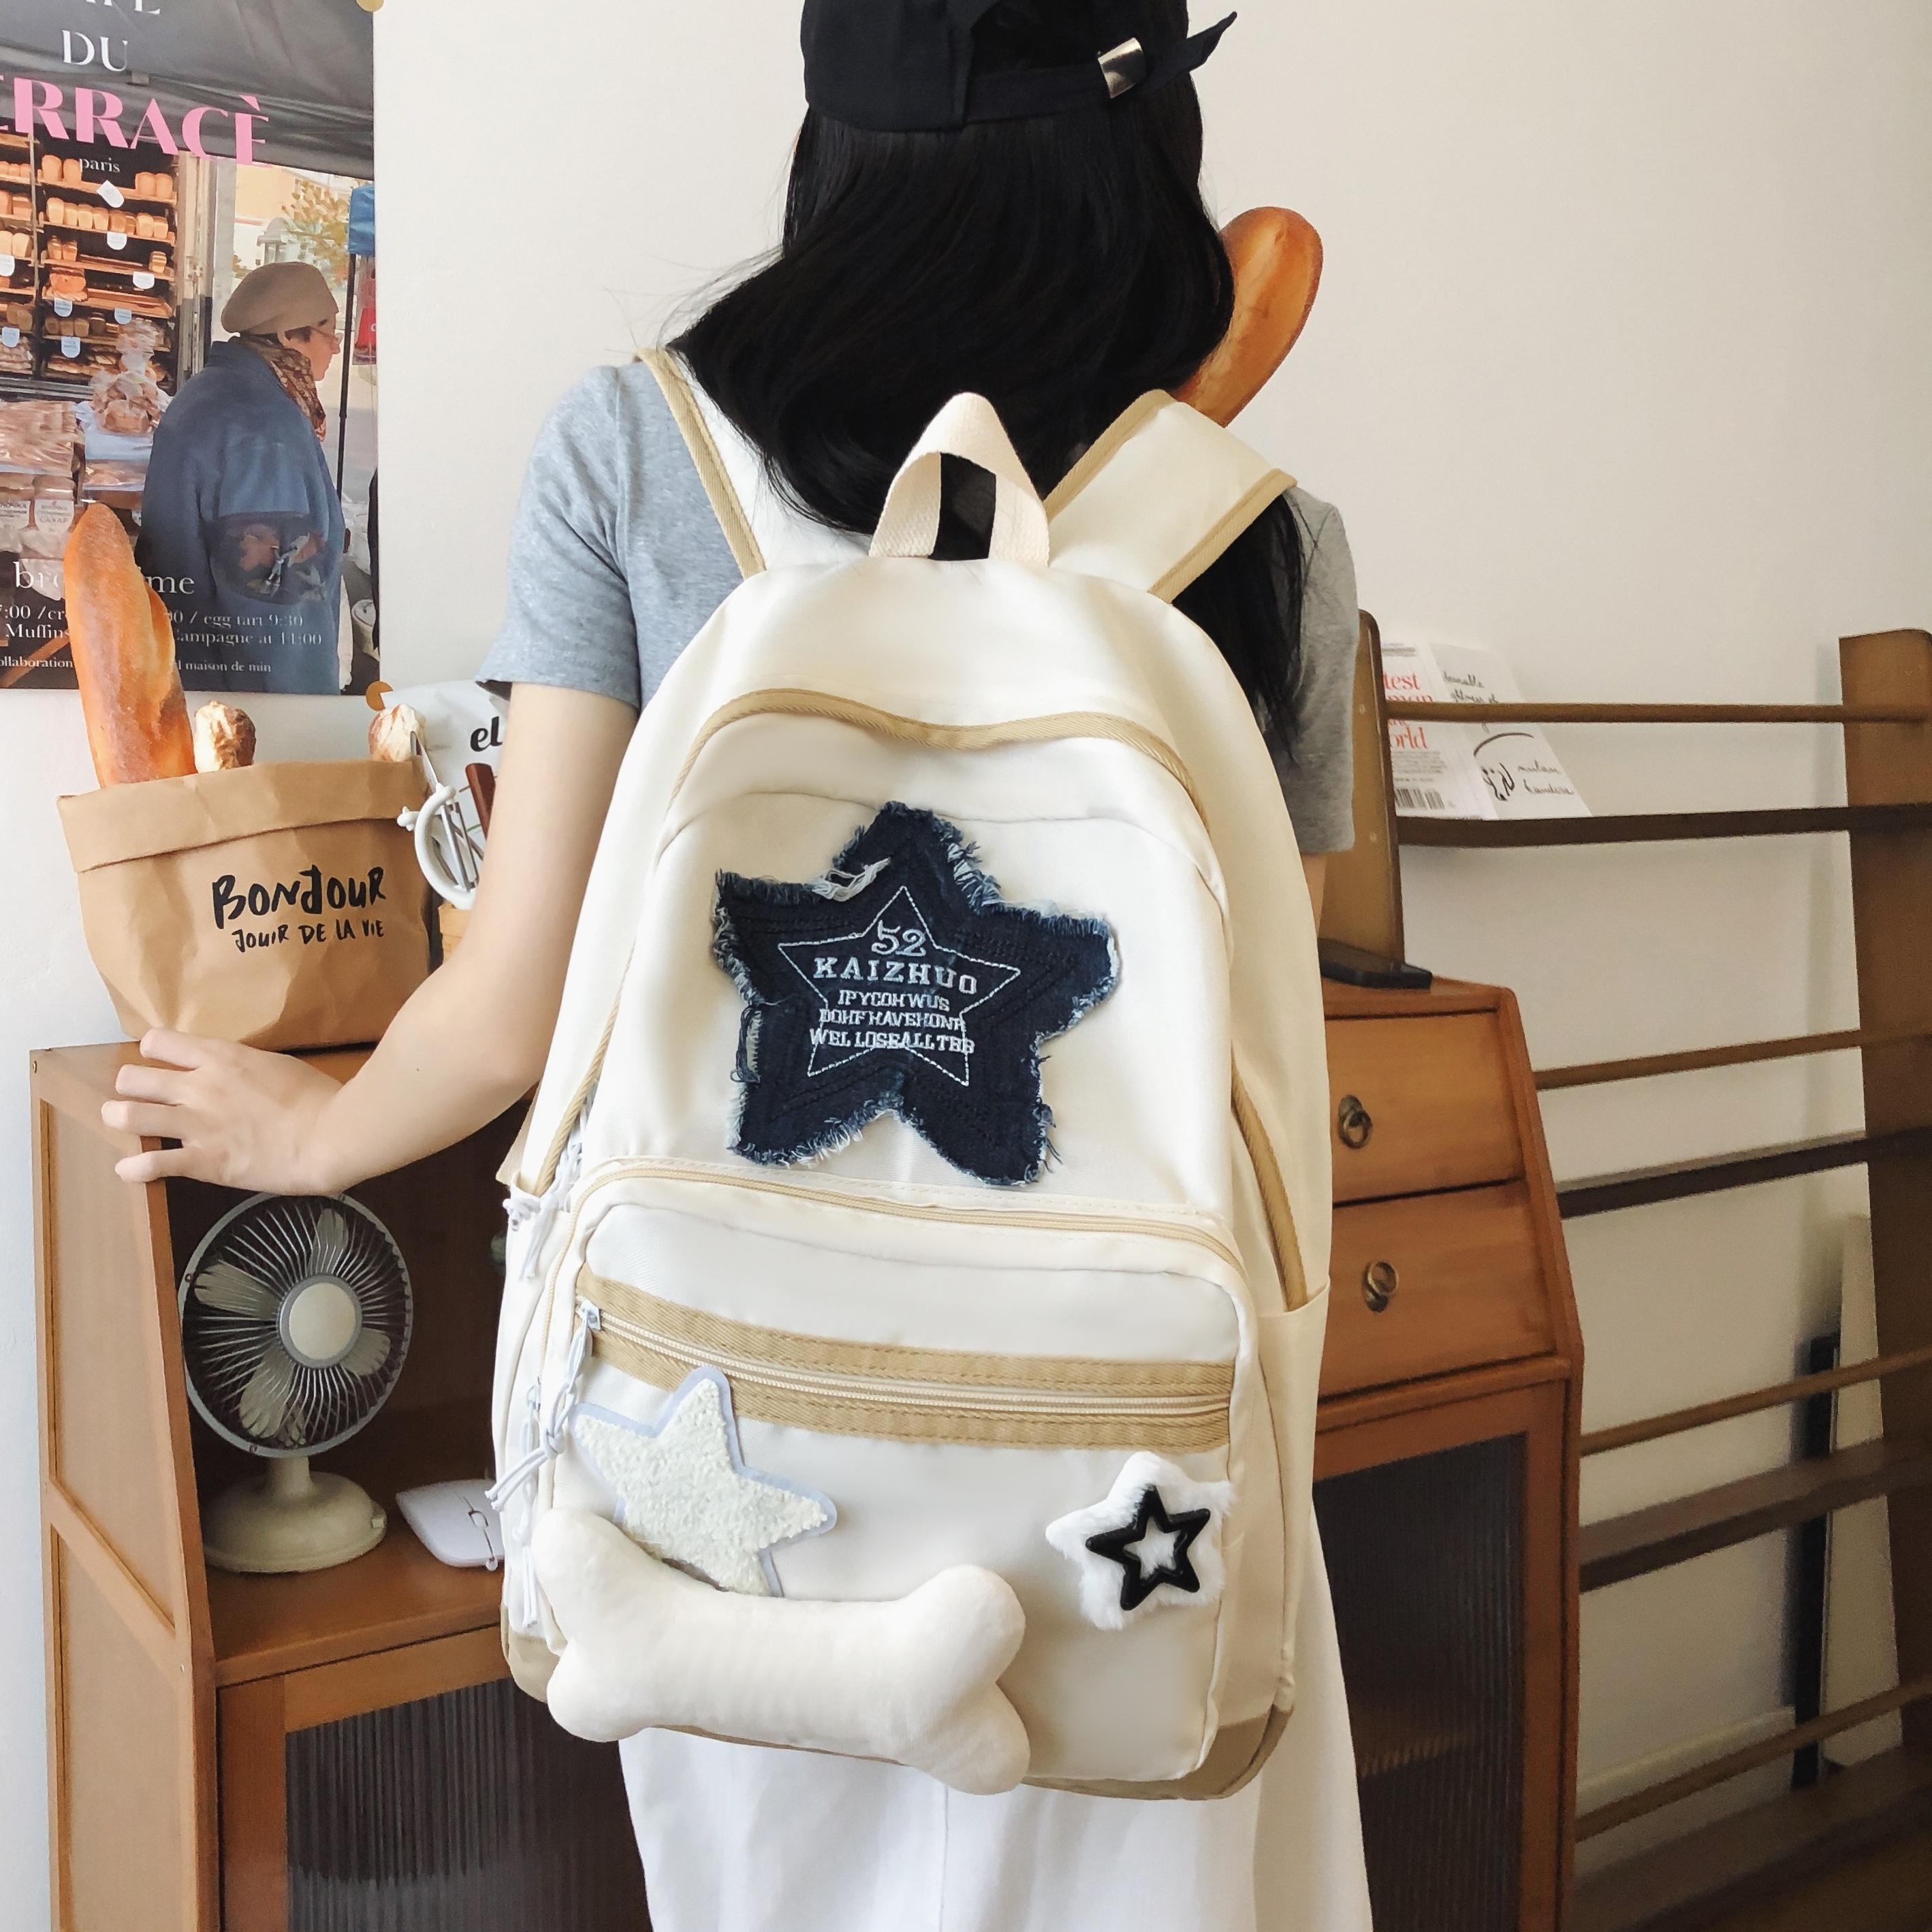 Stray Kids Luminous Backpack Teenage Girl Boy School Bag Usb Charge Bagpack  Korean Style Print Travel Rucksack Laptop Backpacks